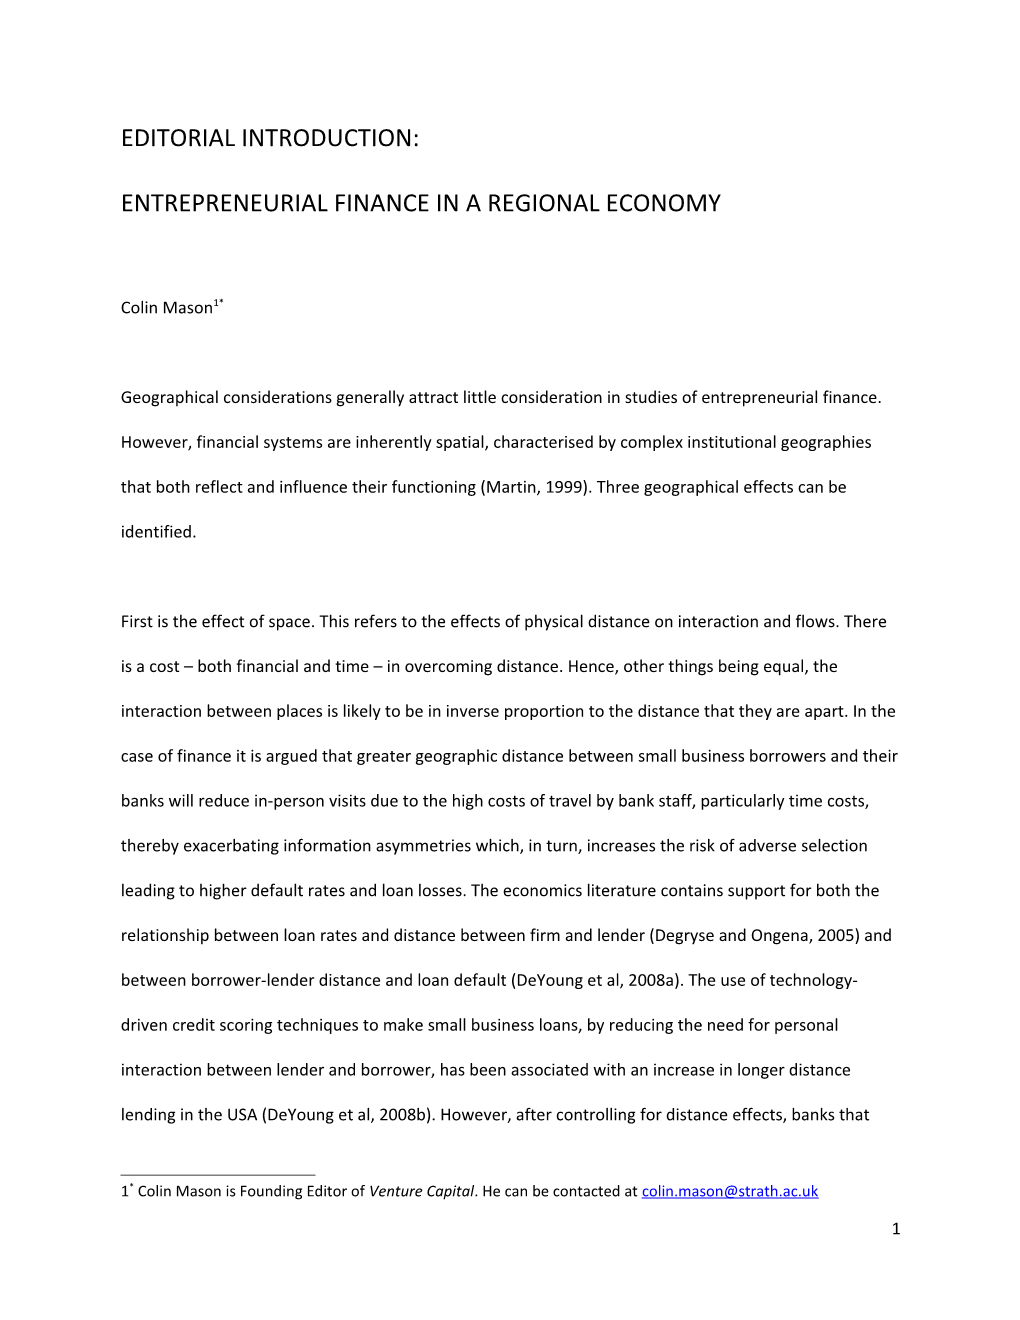 Entrepreneurial Finance in a Regional Economy